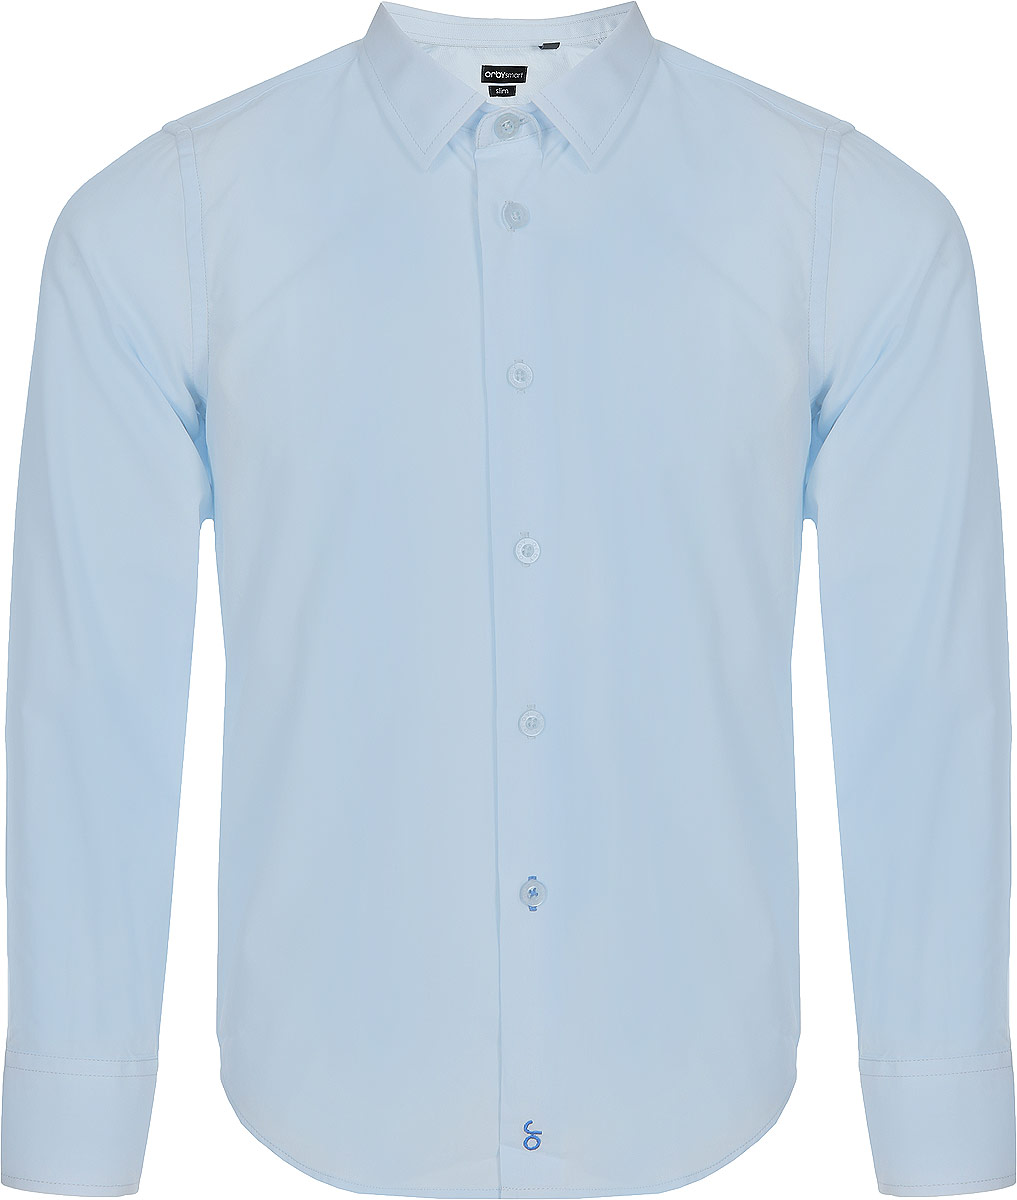 Рубашка для мальчика Orby, цвет: голубой. 80453_OLB. Размер 152